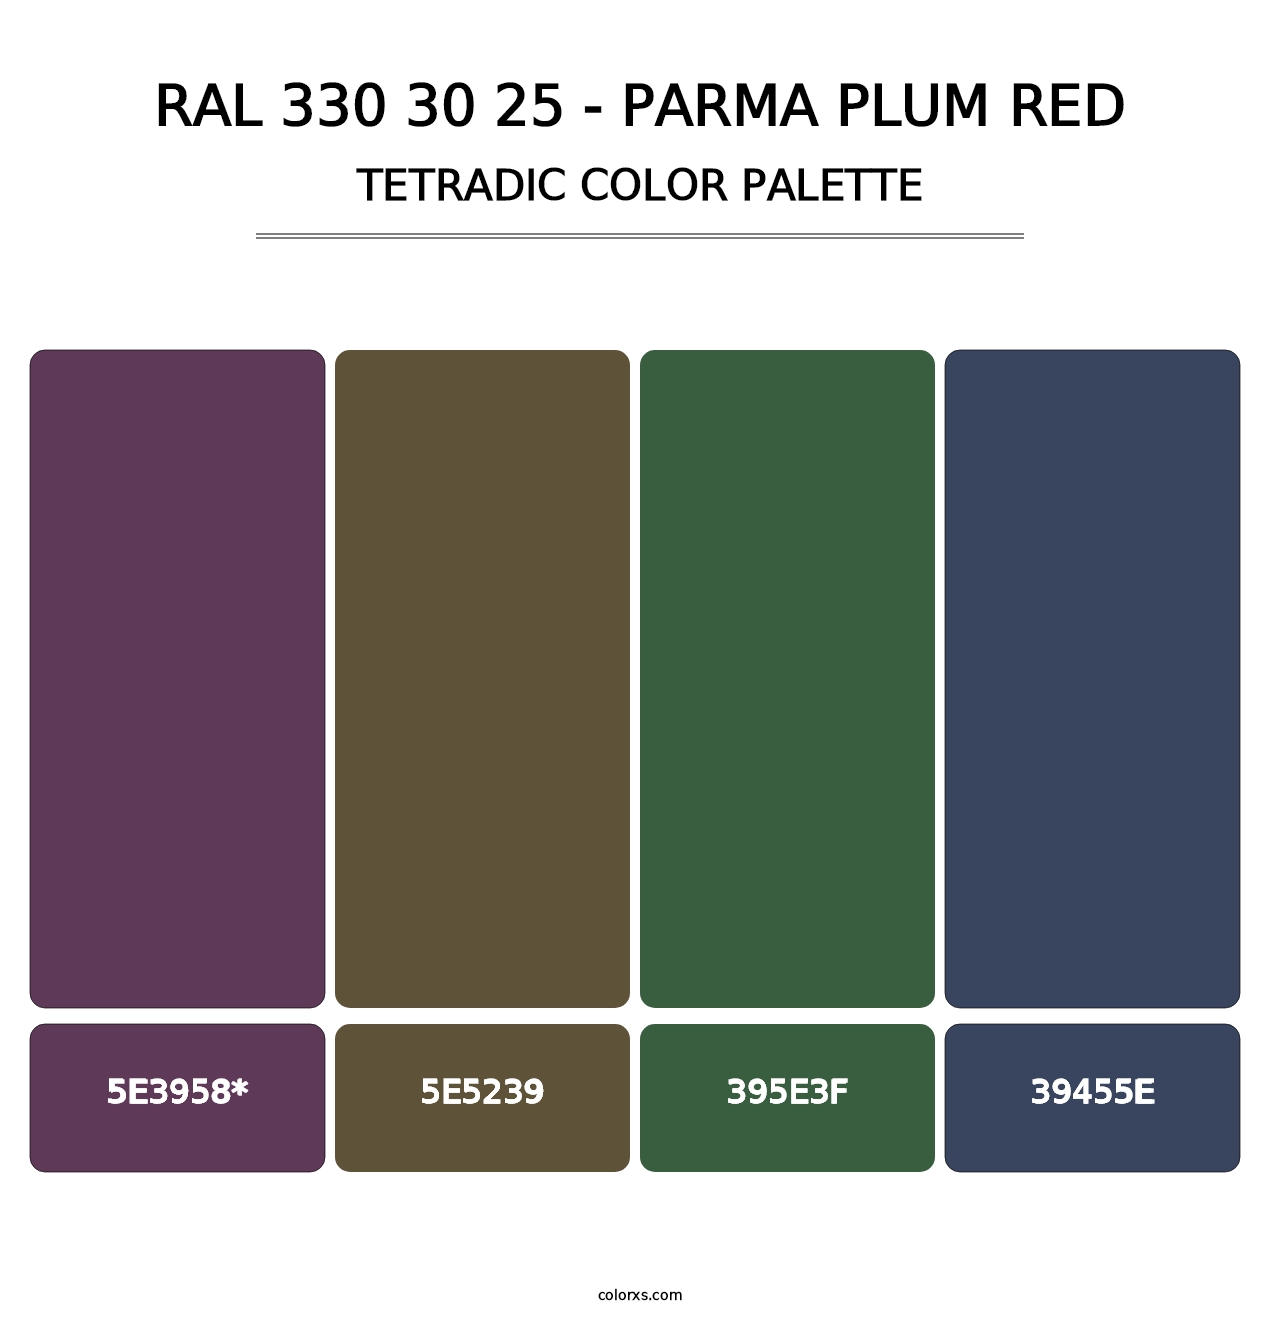 RAL 330 30 25 - Parma Plum Red - Tetradic Color Palette